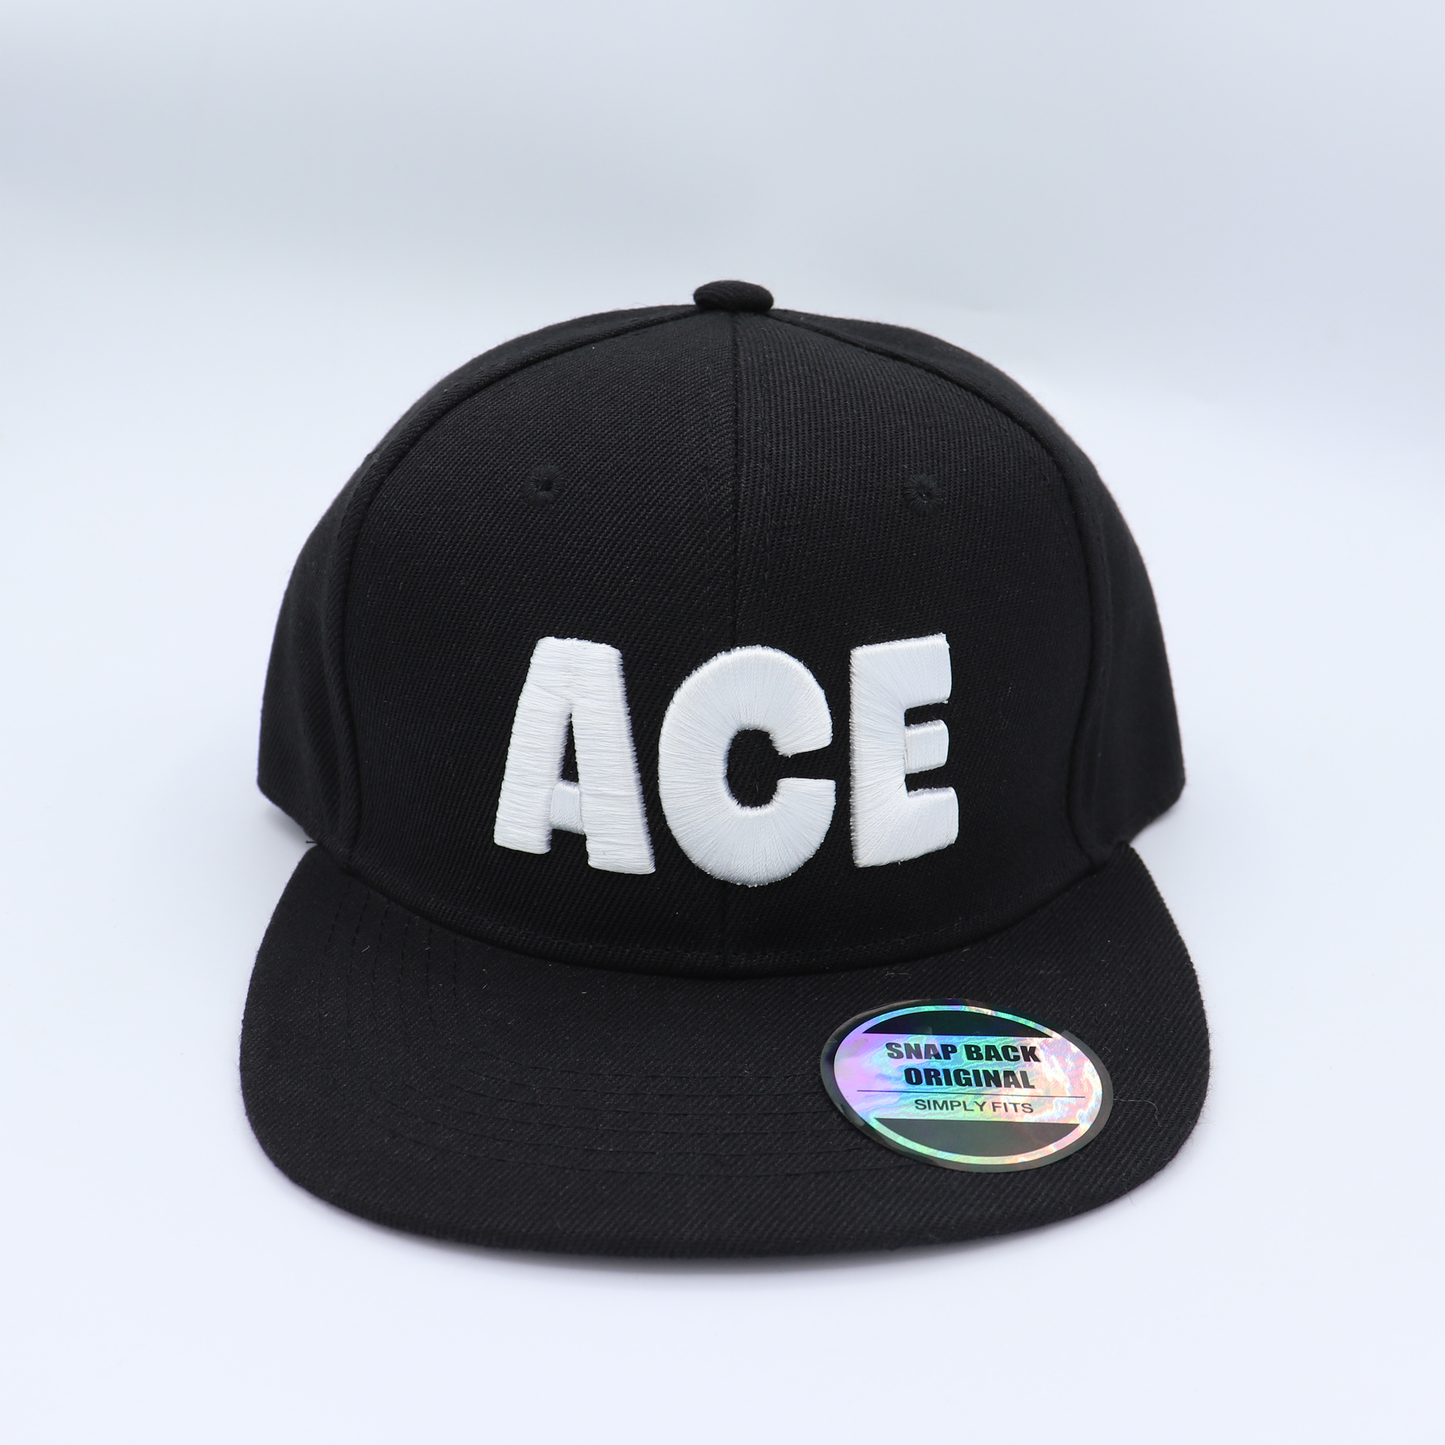 ACE flat peak cap